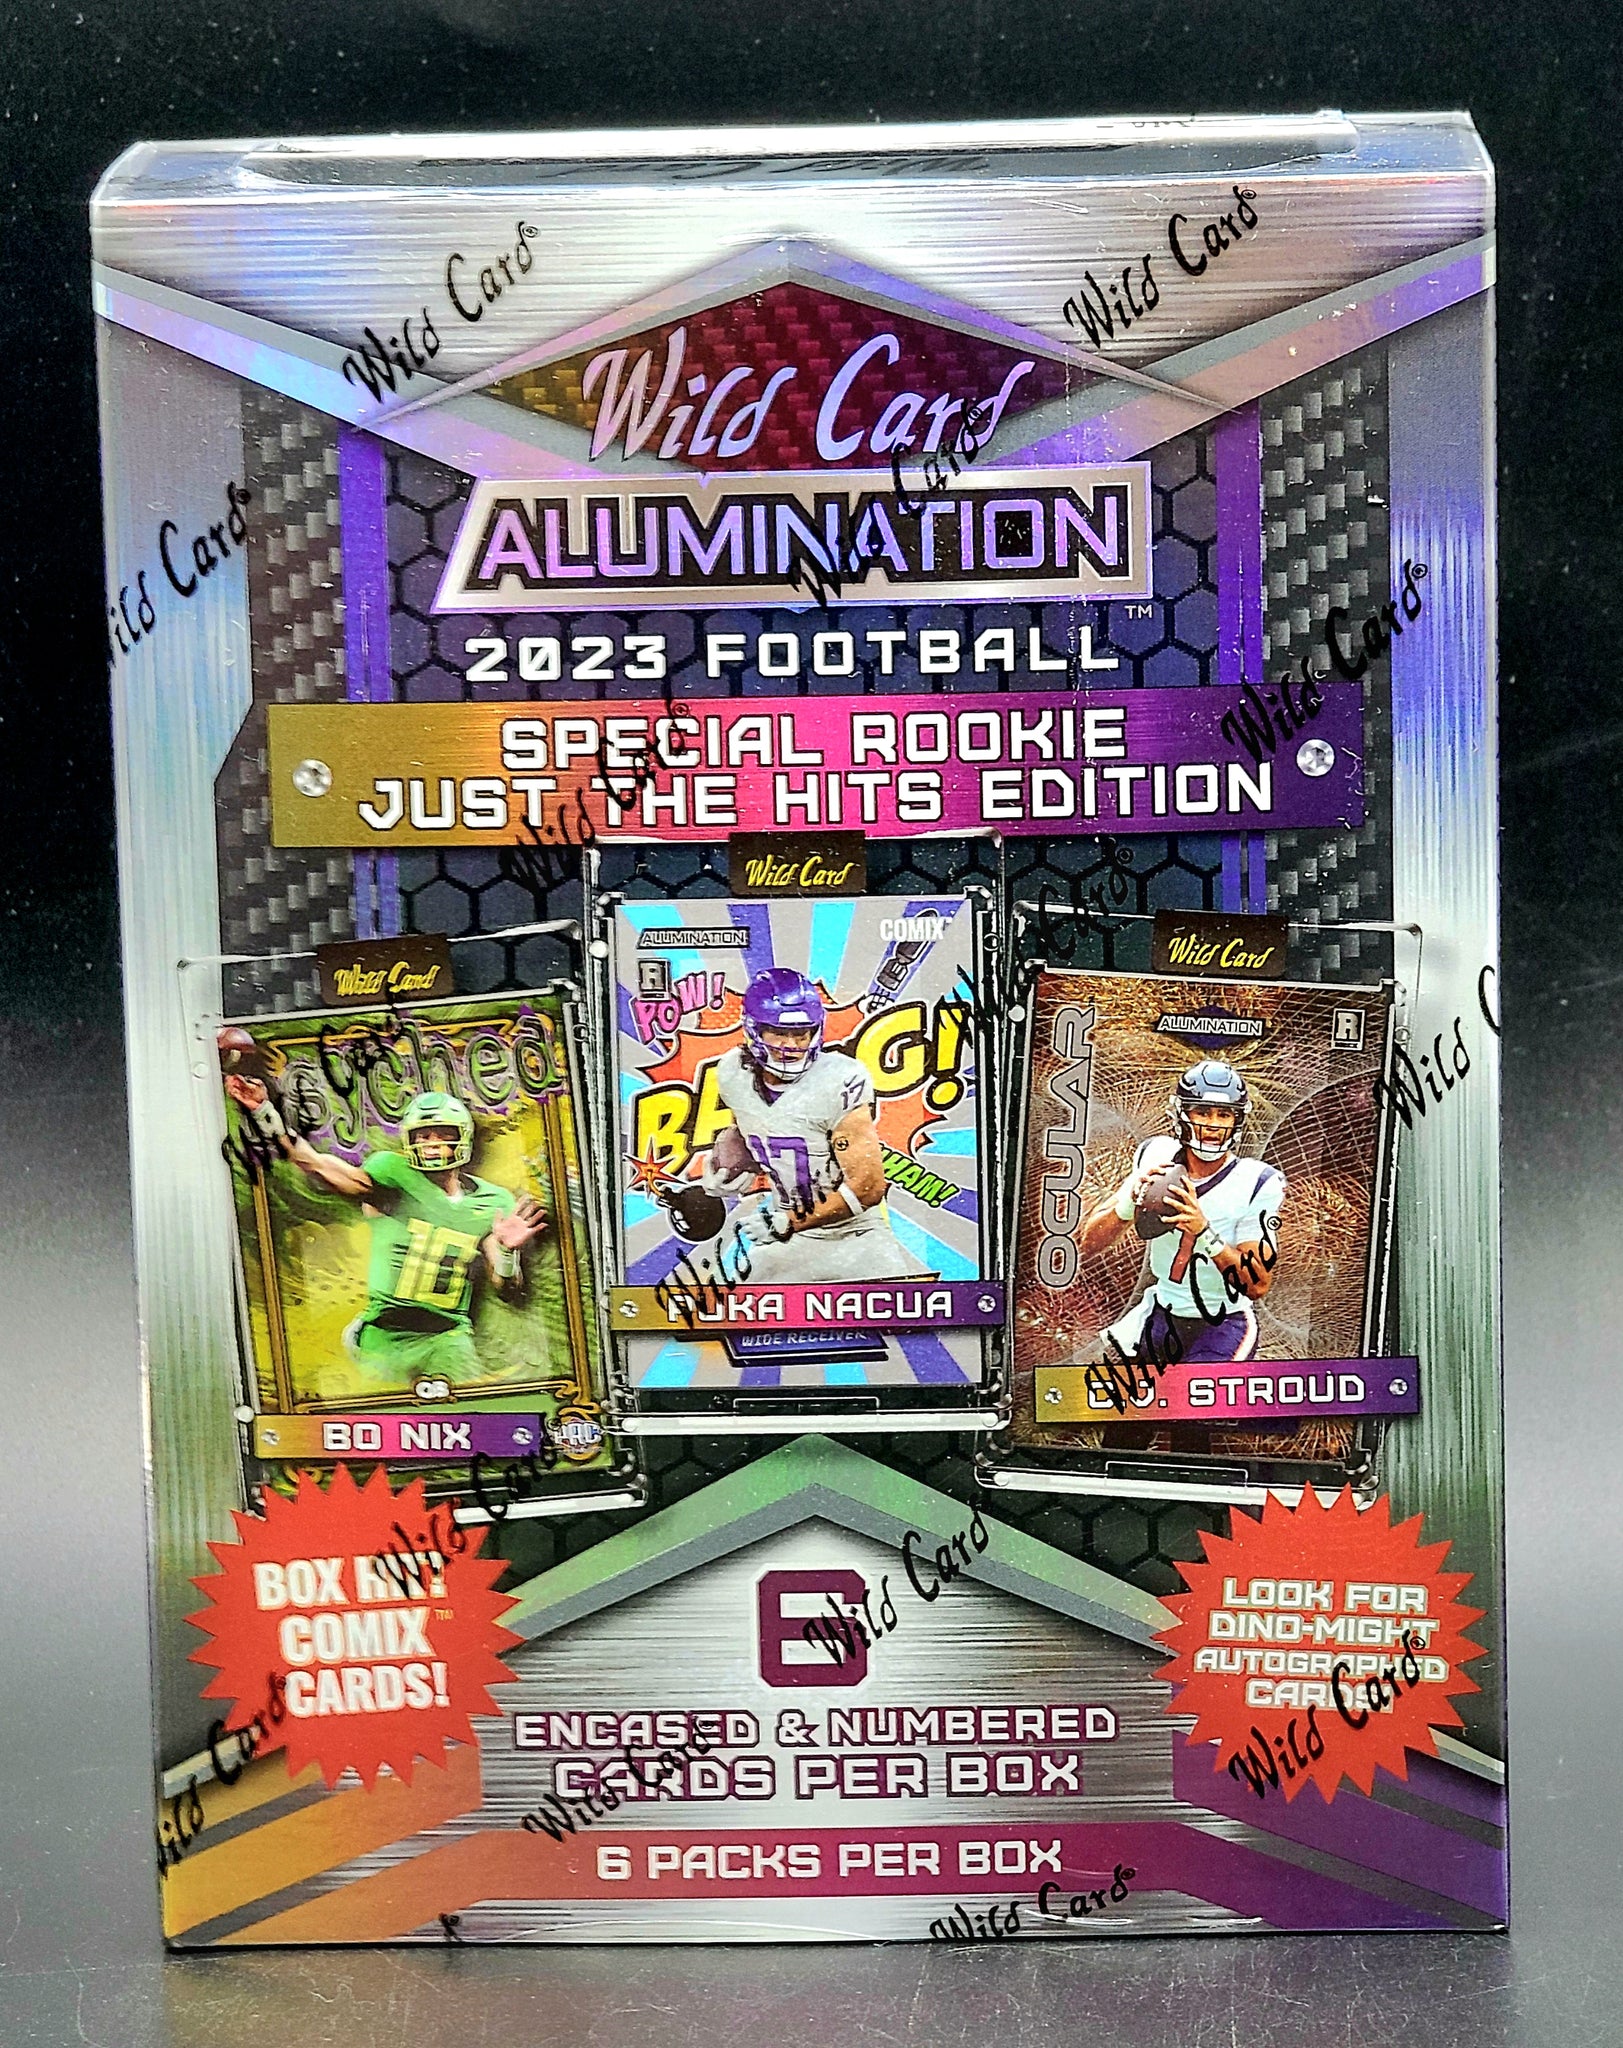 2023 Wild Card Alumination Special Rookie & Insert Edition Football Hobby Box